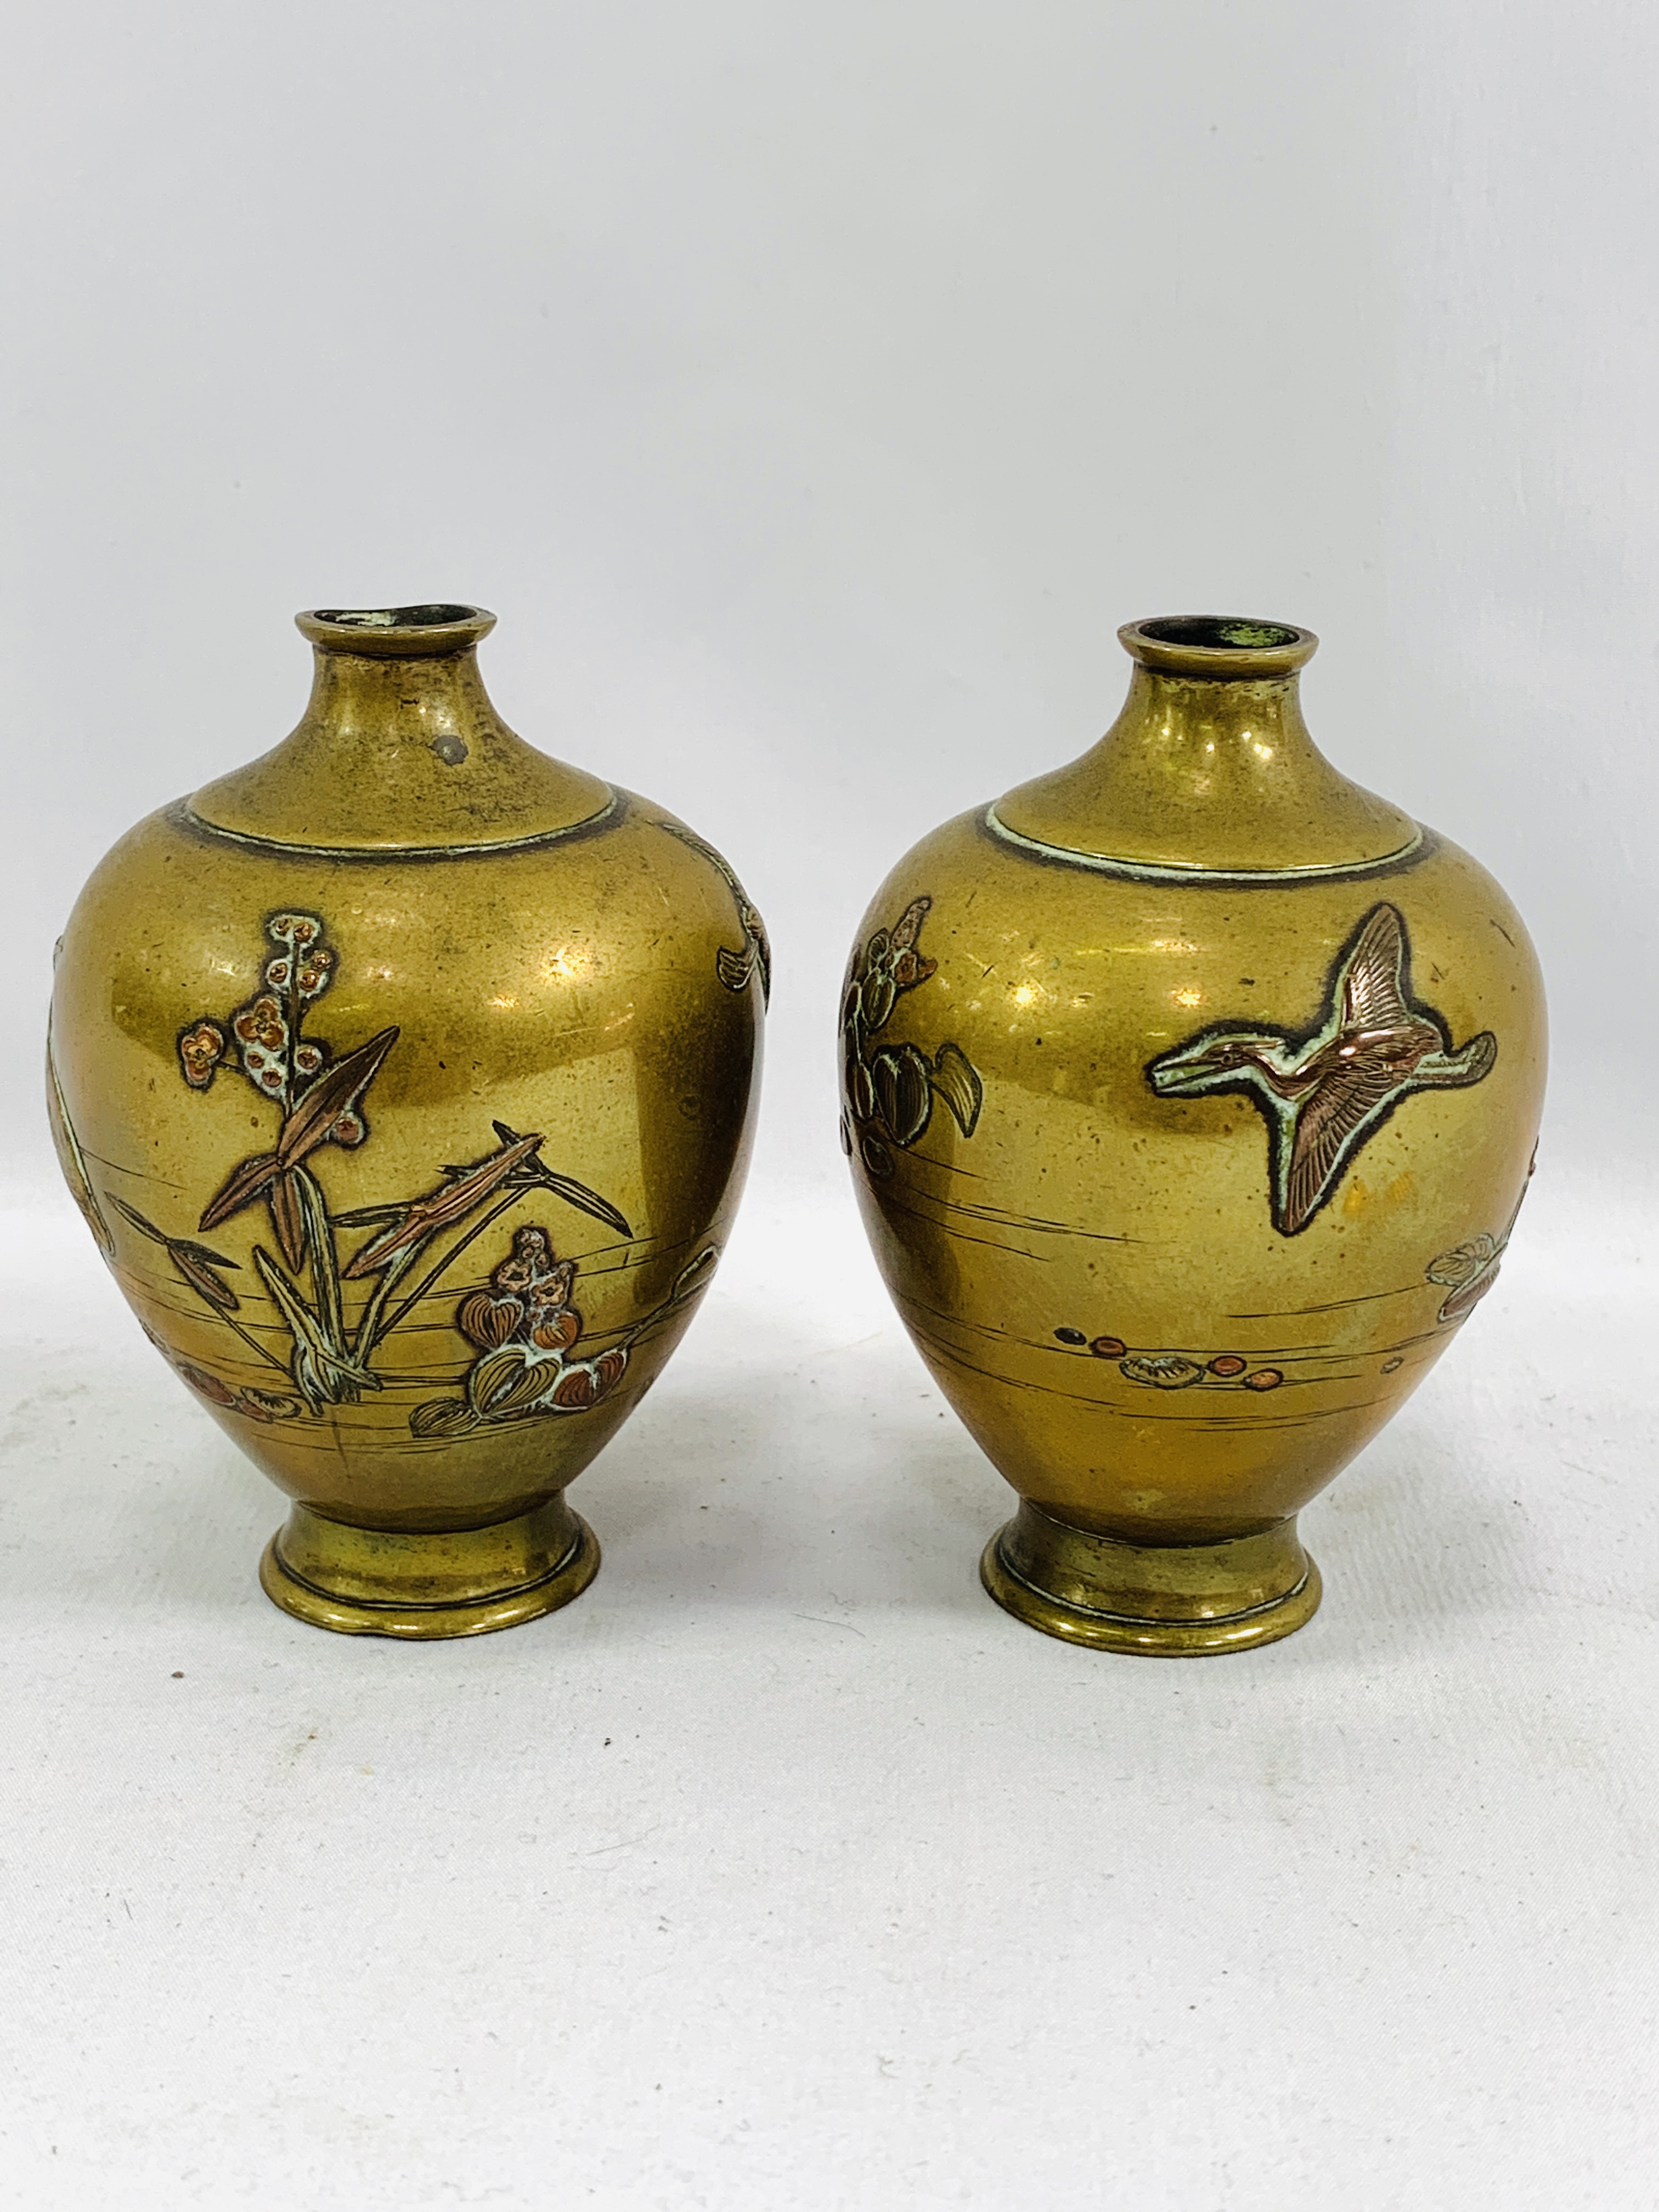 A pair of Meiji period vases